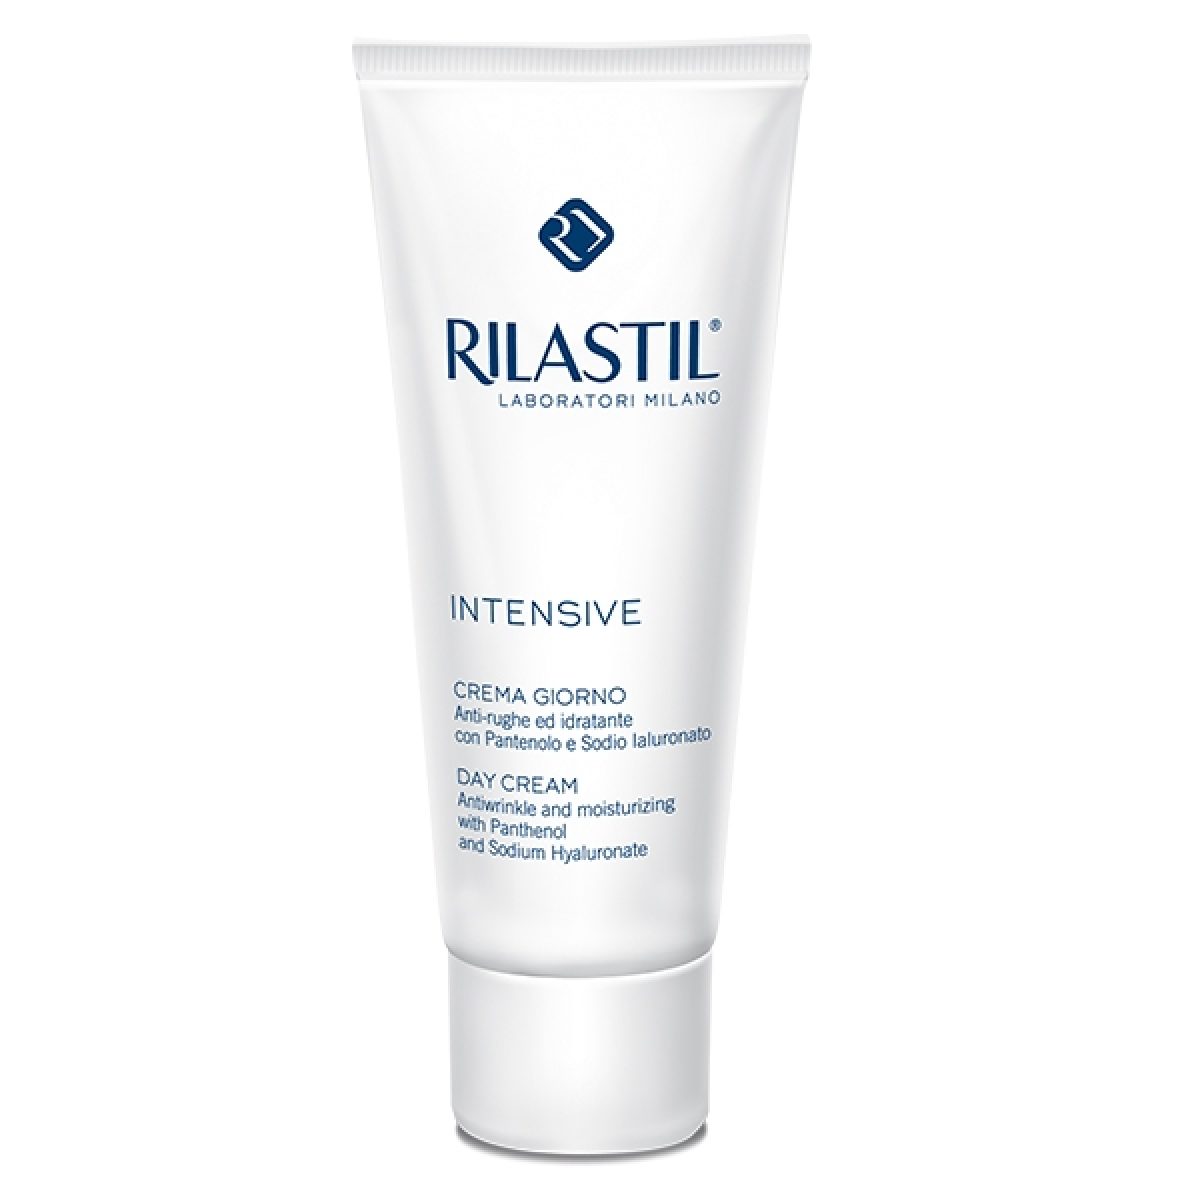 Rilastil-Intensive Cream